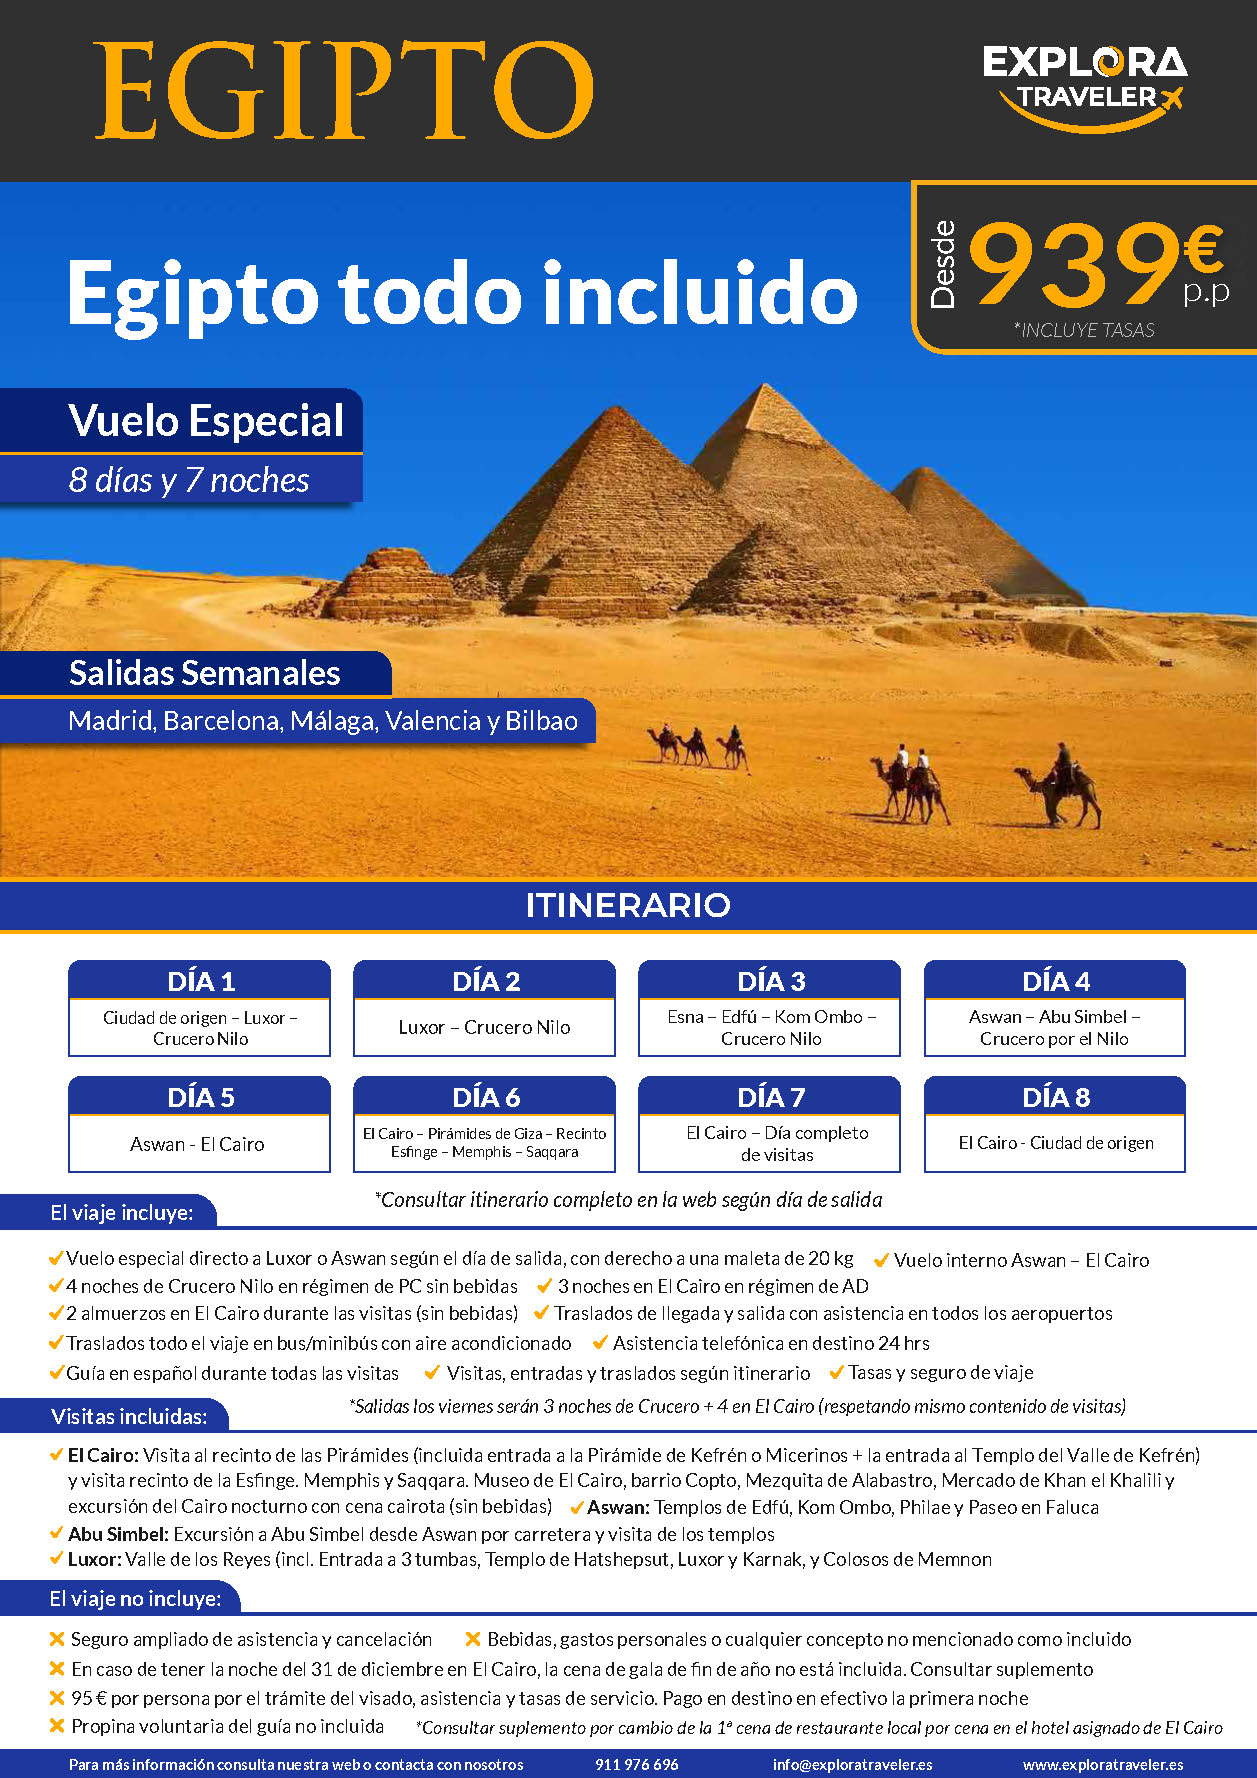 Oferta Explora Traveler Egipto Charter Todo Incluido 8 dias salidas 2024 vuelo directo desde Madrid Barcelona Bilbao Malaga y Valencia